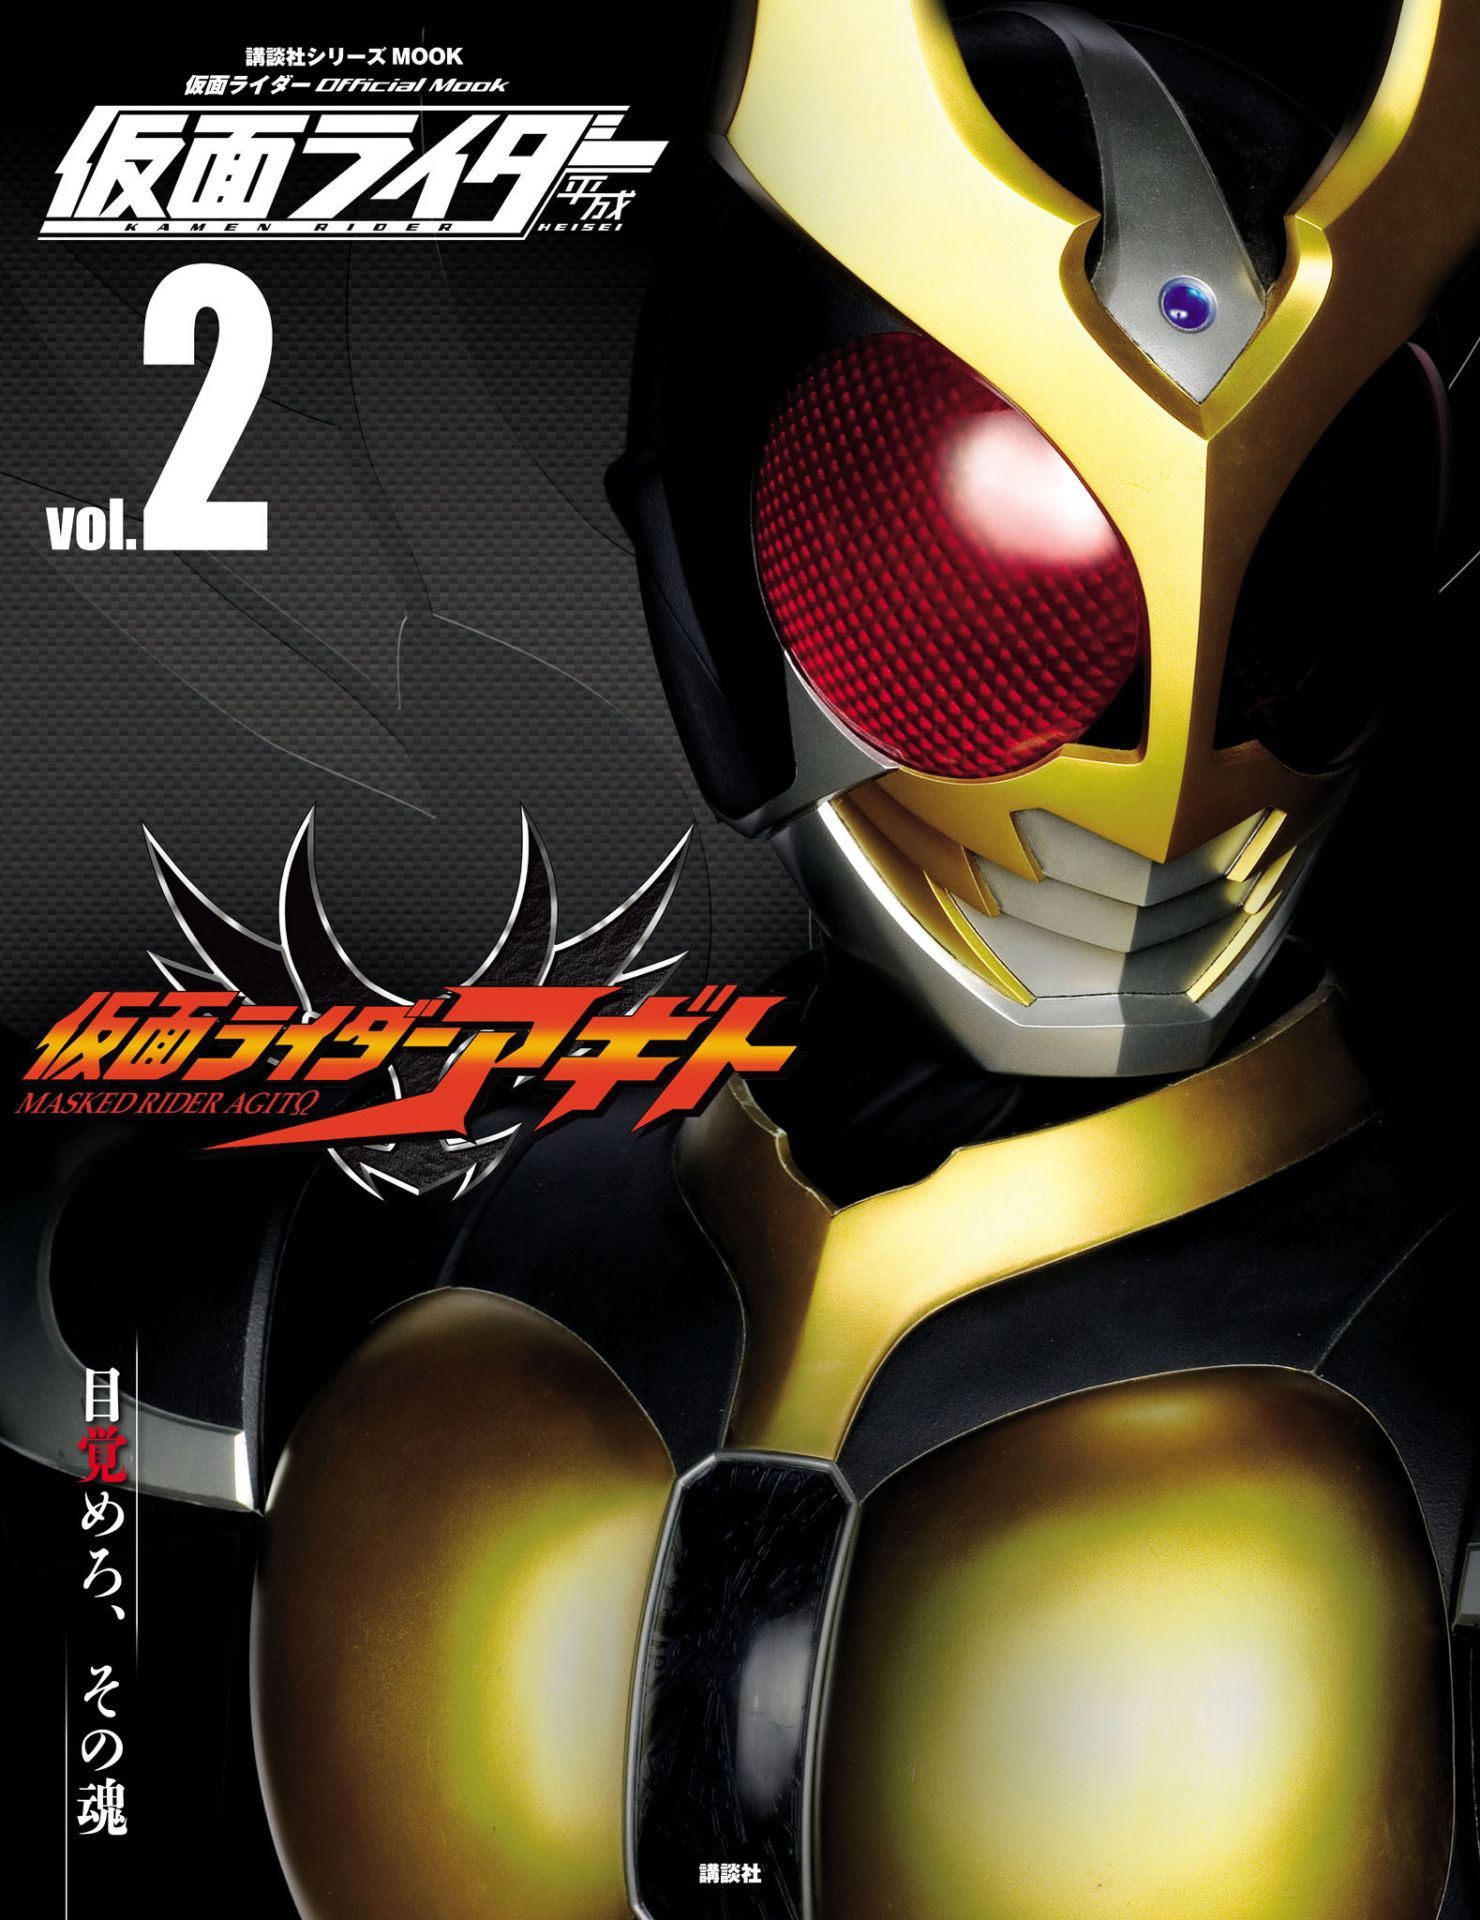 Kodansha Series MOOK Kamen Rider | Kamen Rider Wiki | Fandom